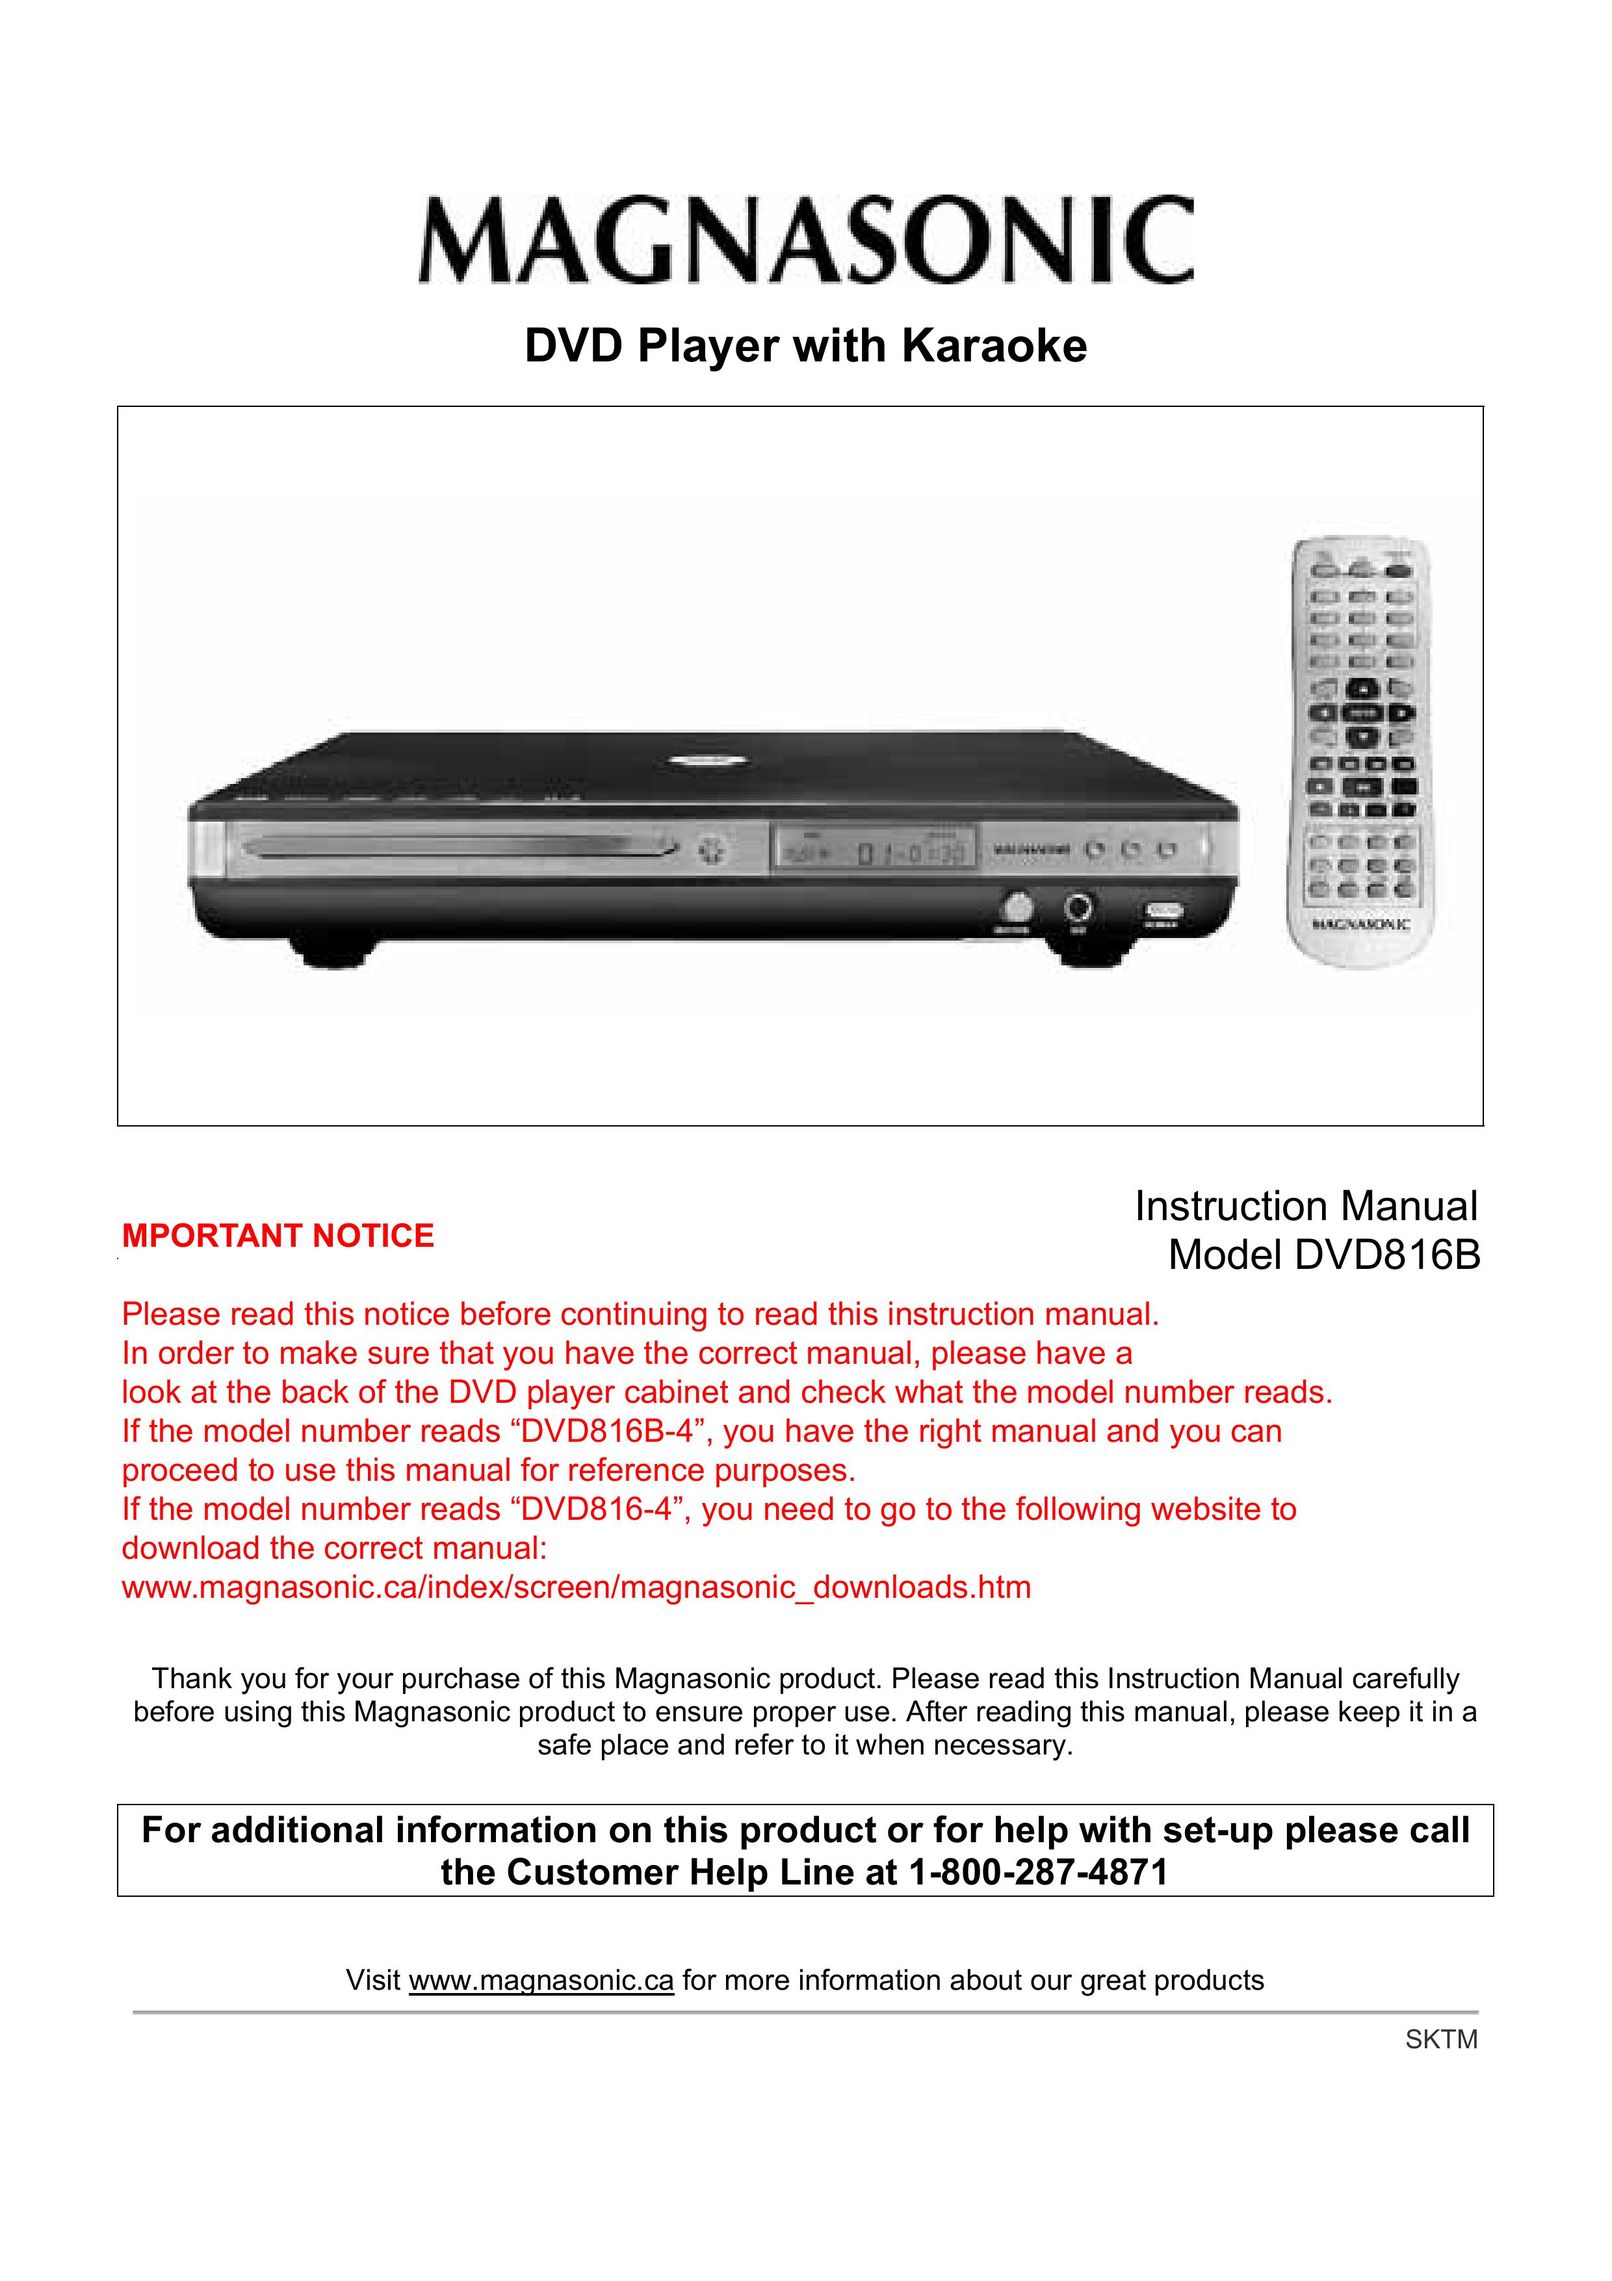 Magnasonic DVD816B DVD Player User Manual